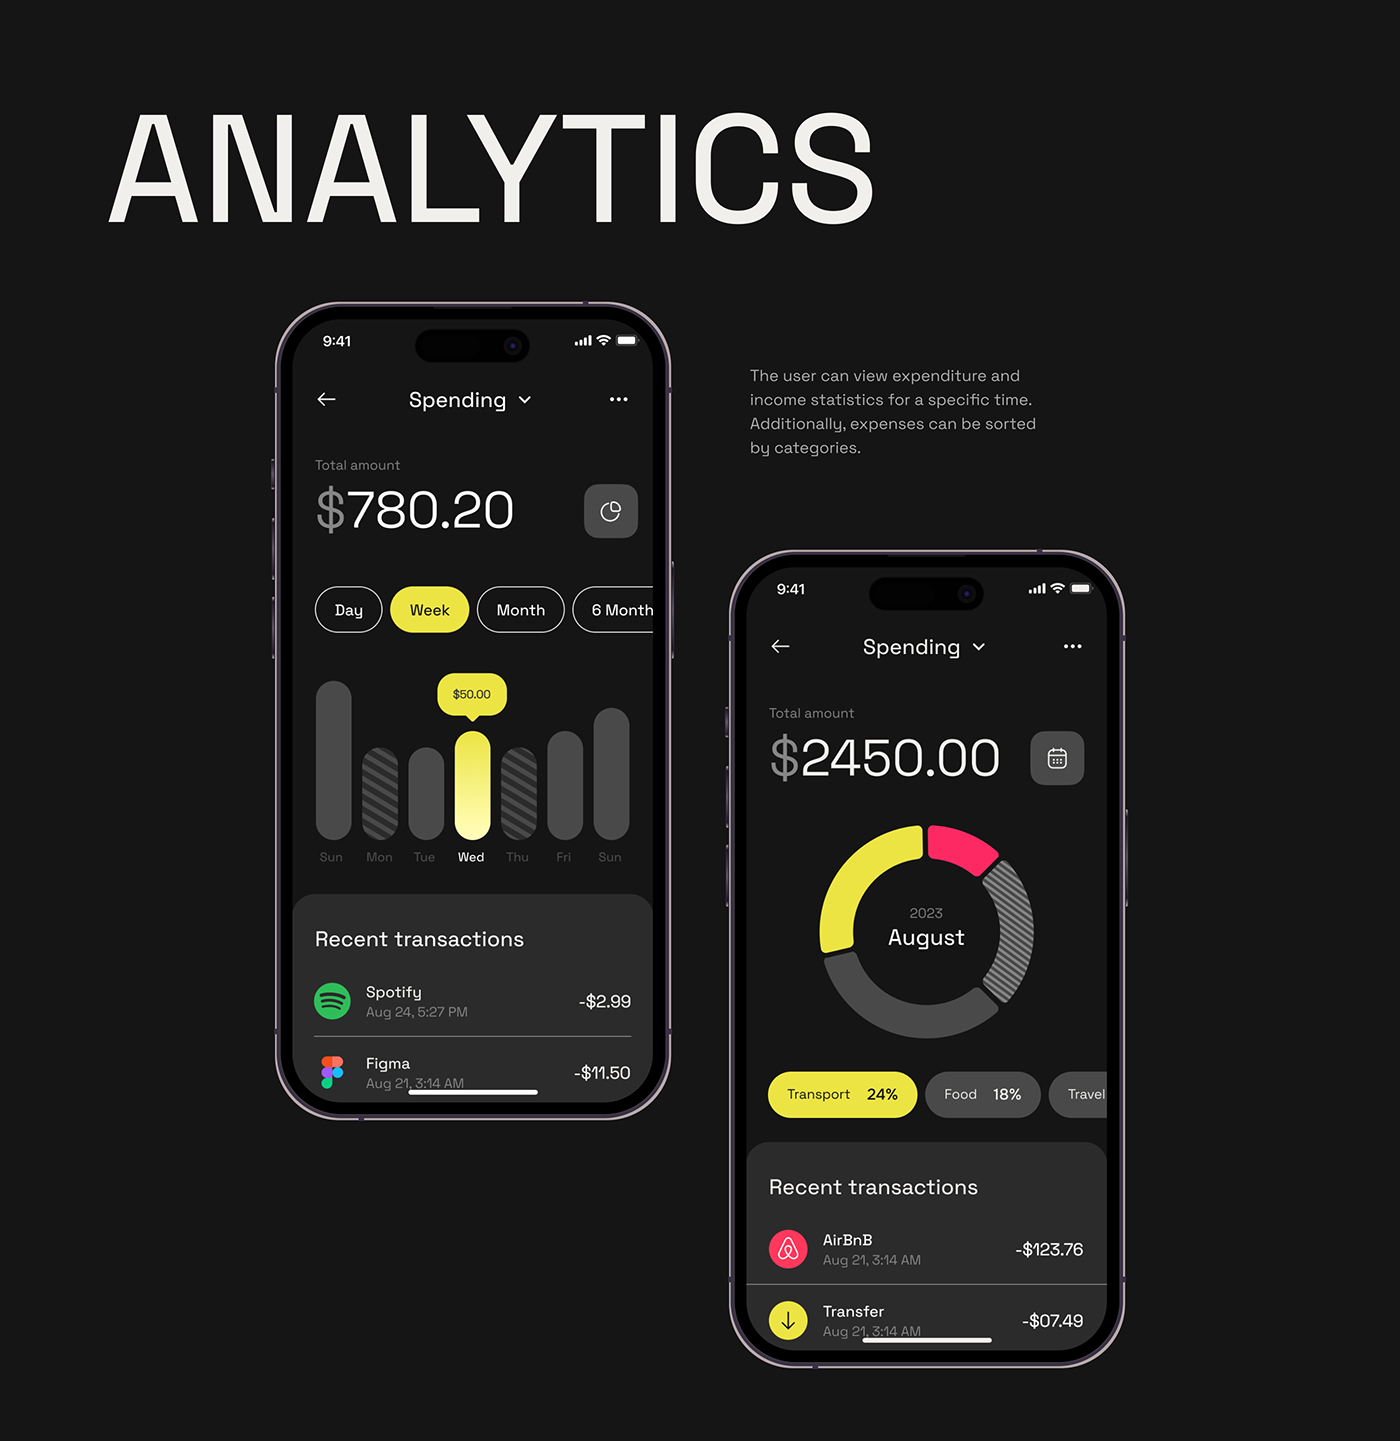 app mobile design Bank banking UI ux finance financial Fintech